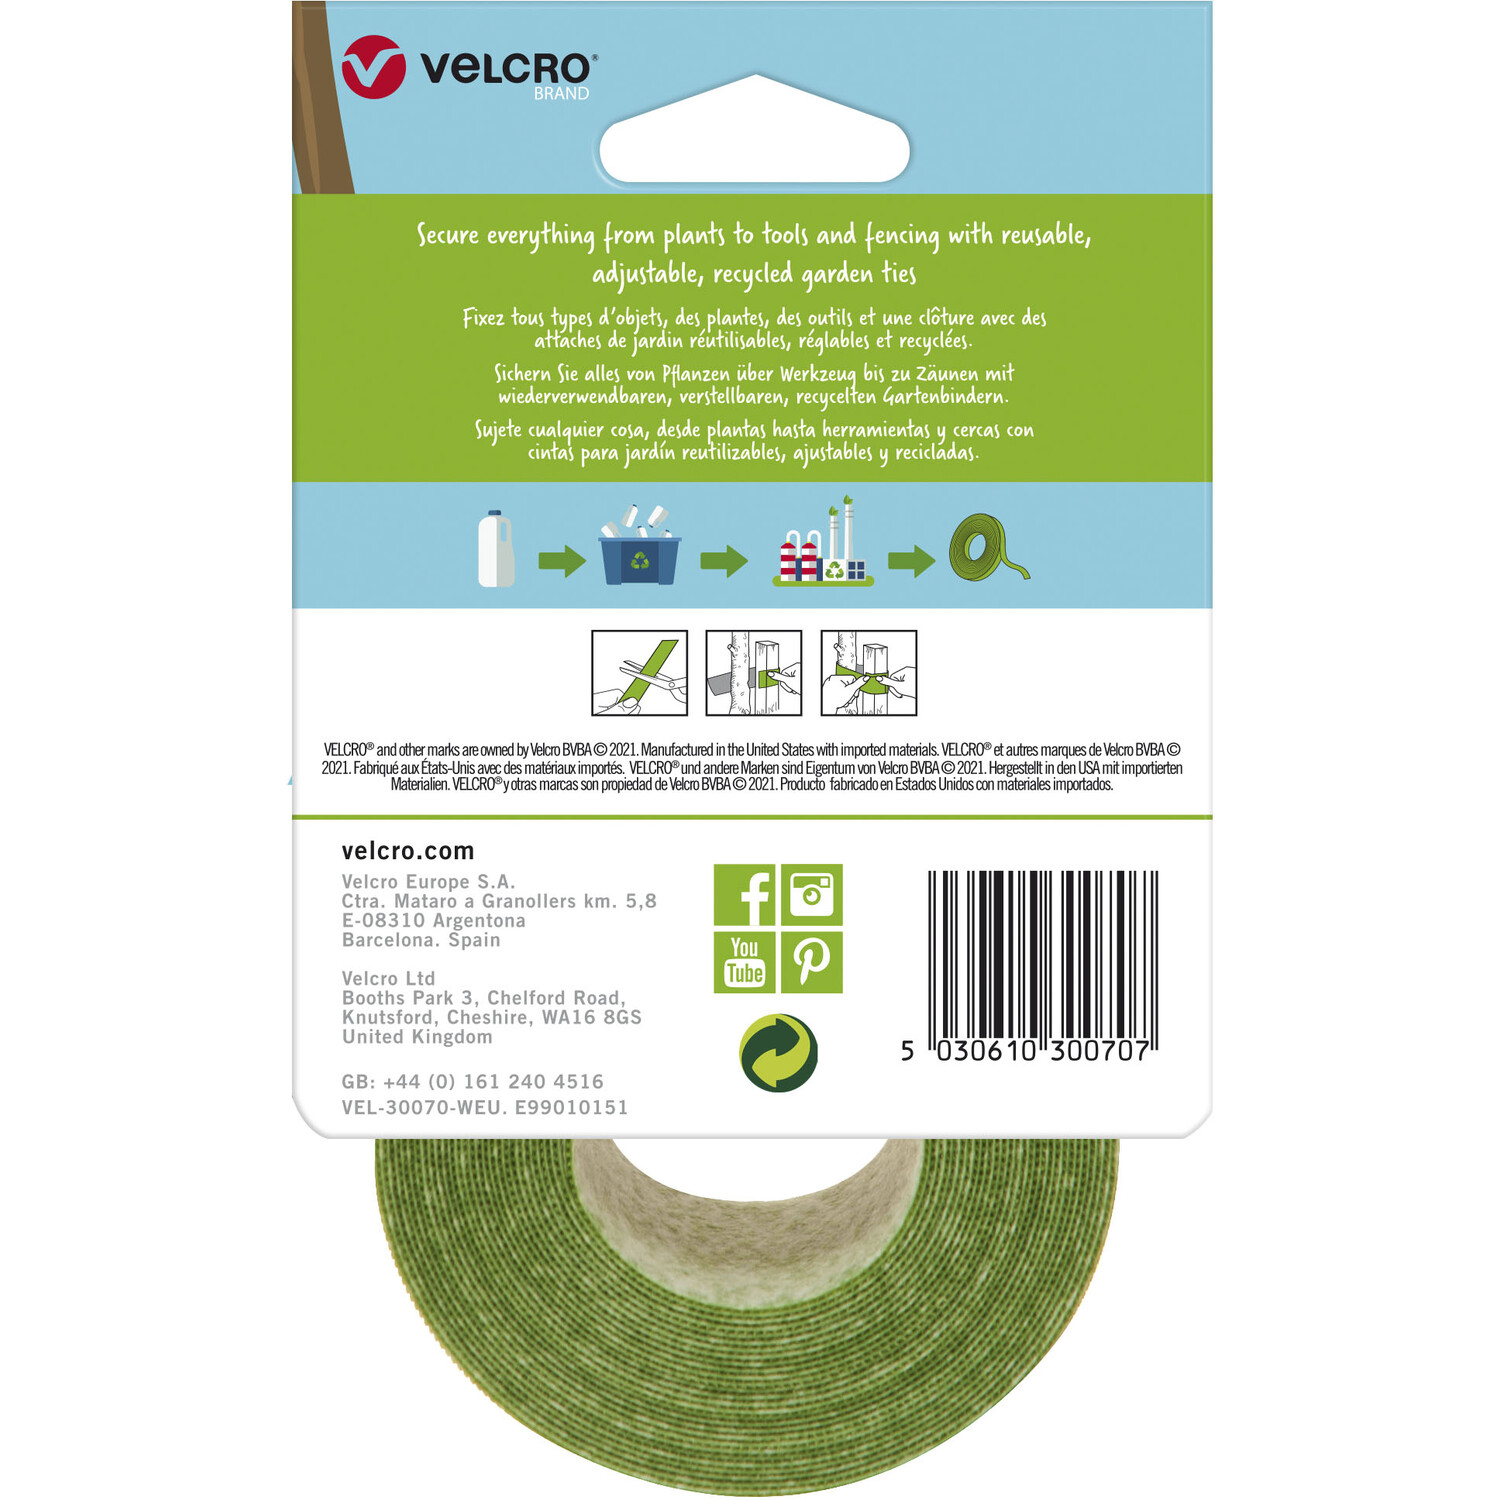 Velcro One Wrap Plant Ties - Green / 5.4m Image 2